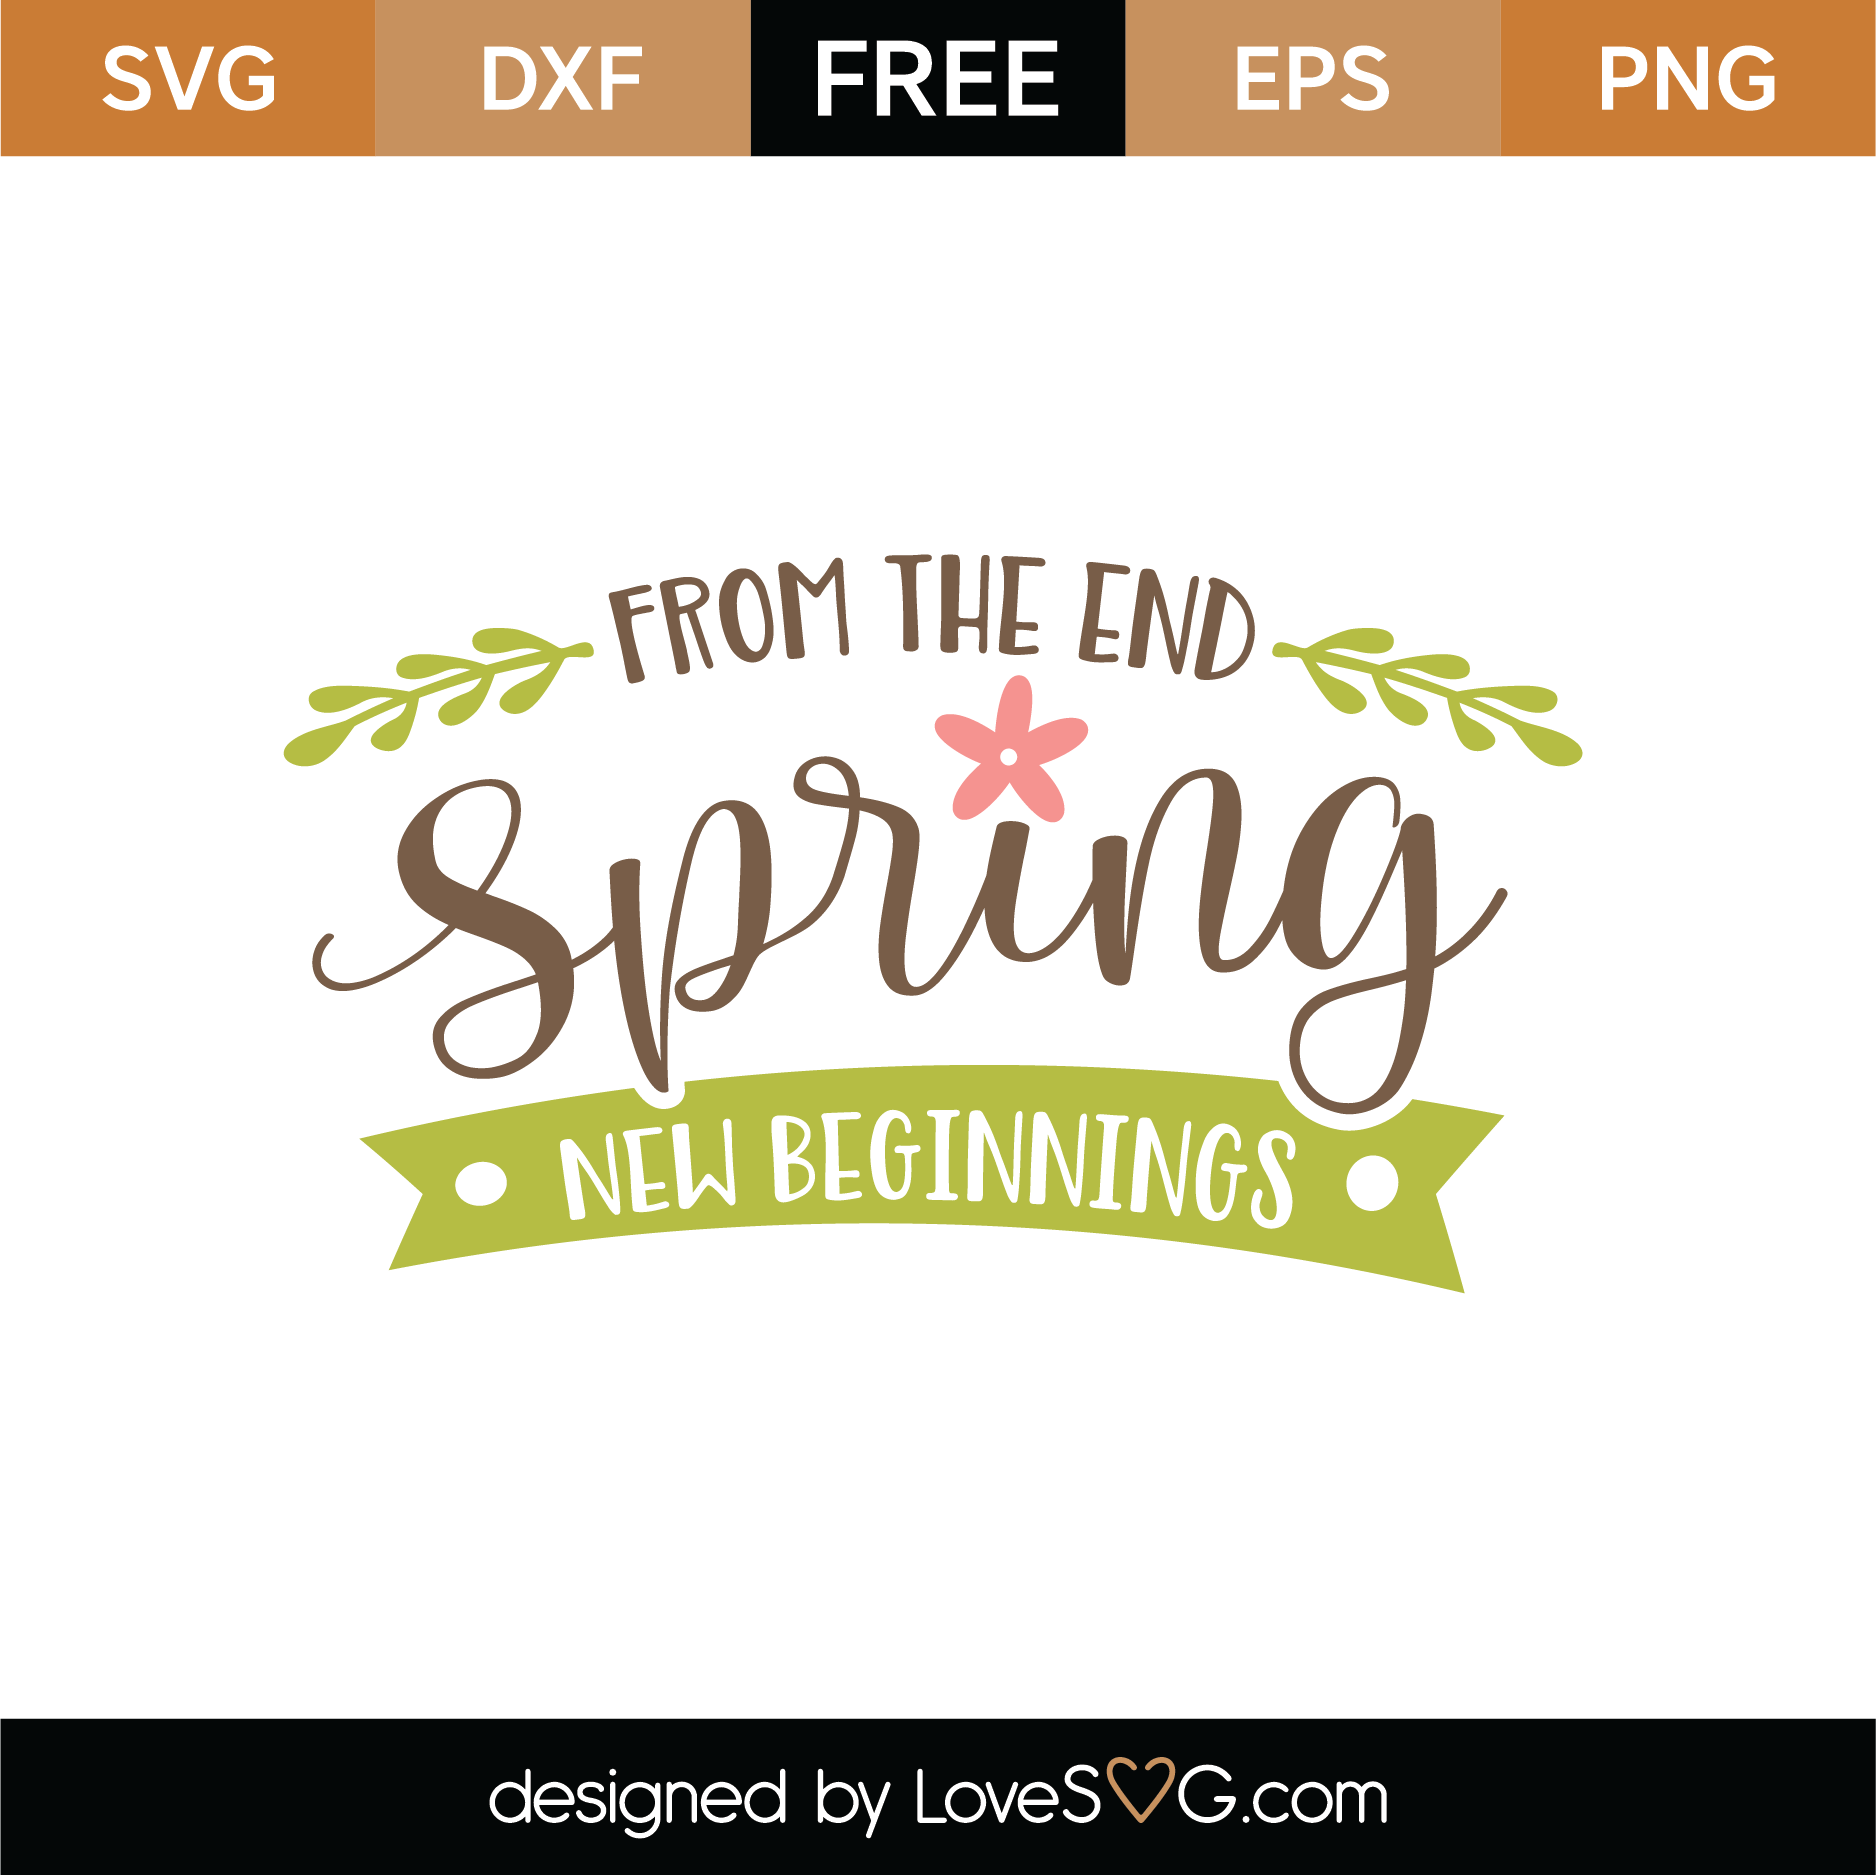 Download Free Spring New Beginnings SVG Cut File | Lovesvg.com